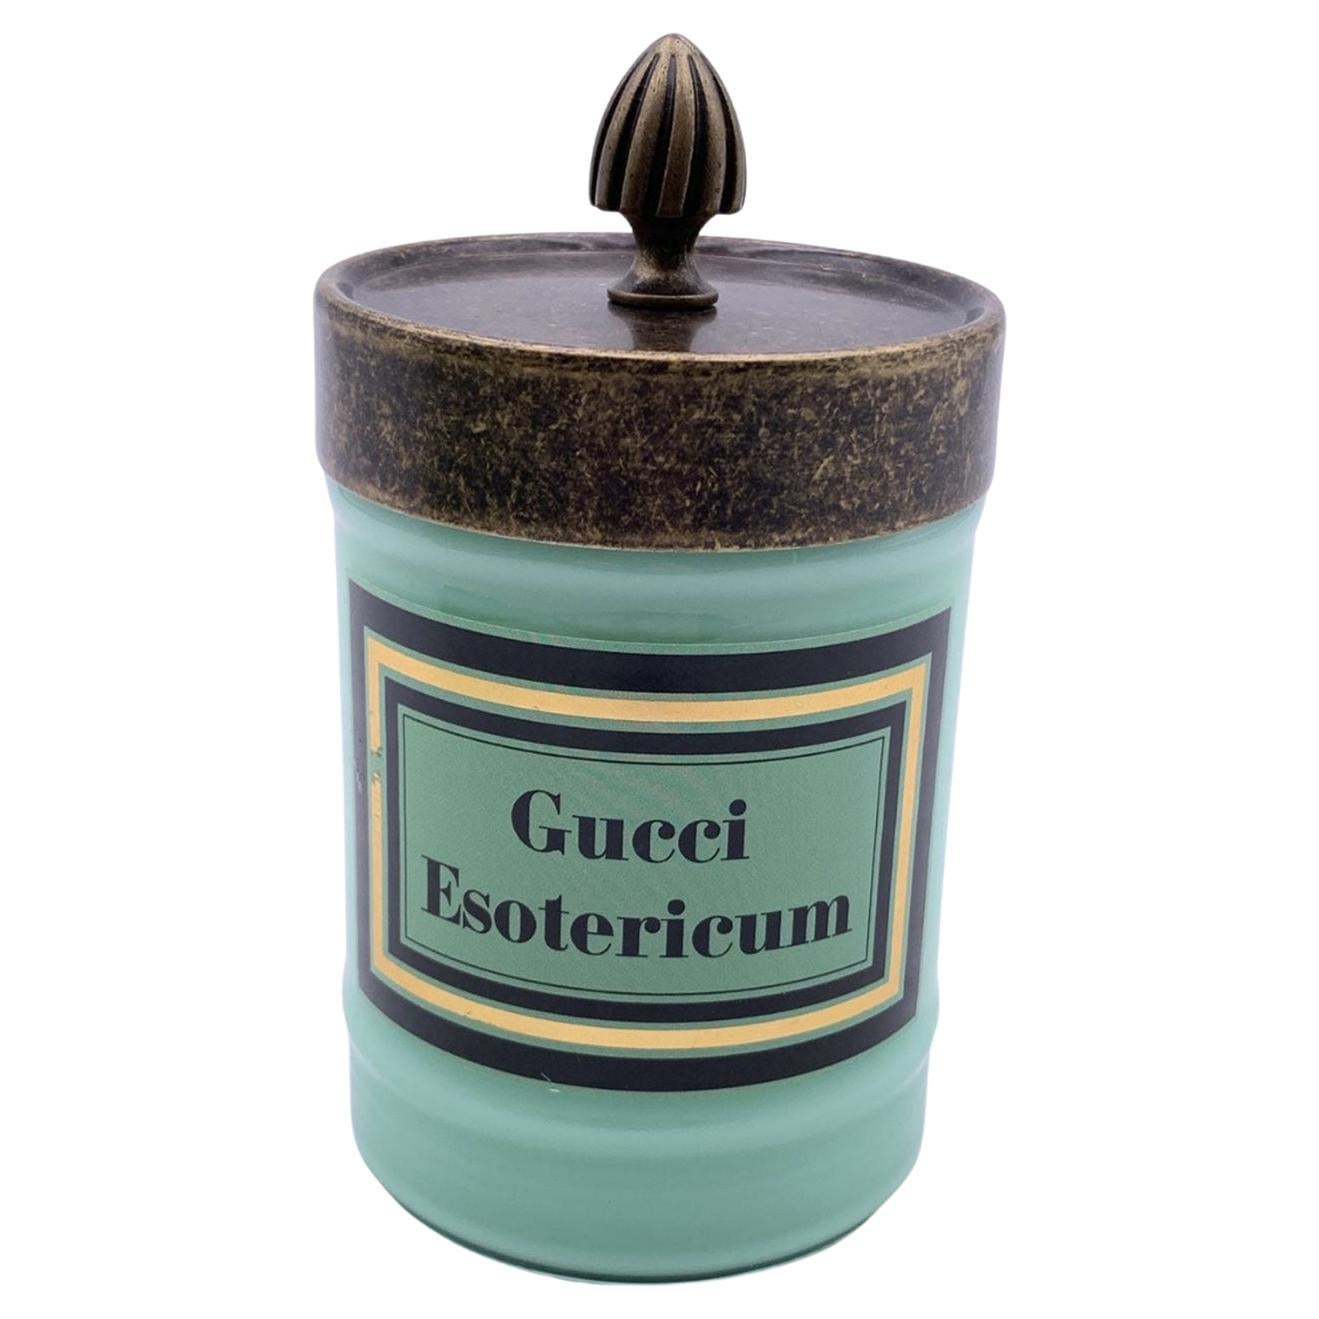 Gucci Esotericum Scented Candle Aqua Green Murano Glass Jar